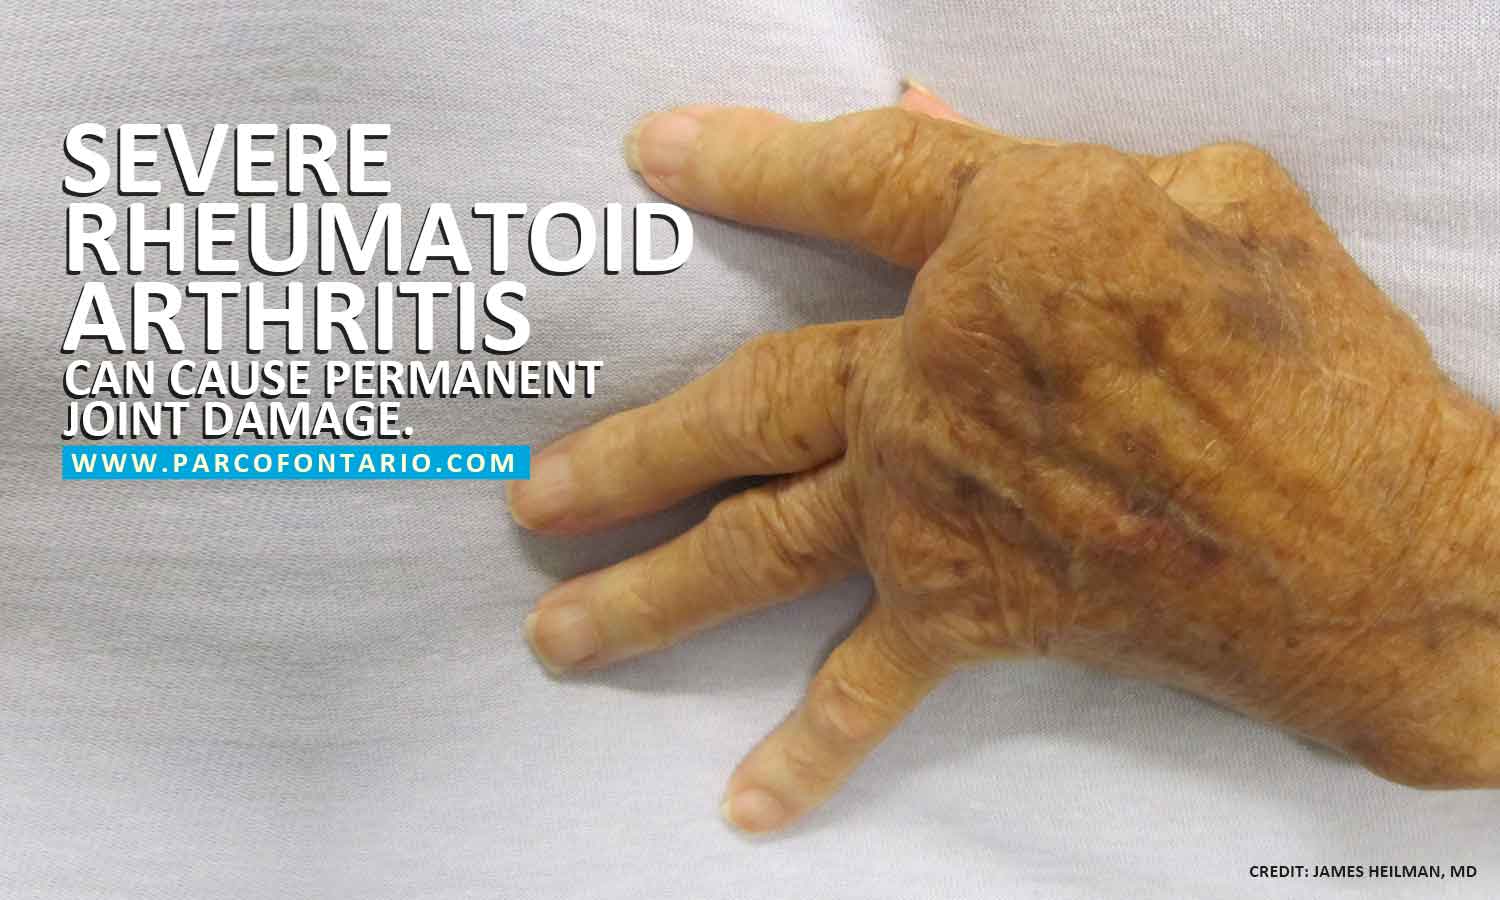 rheumatoid arthritis can cause permanent joint damage